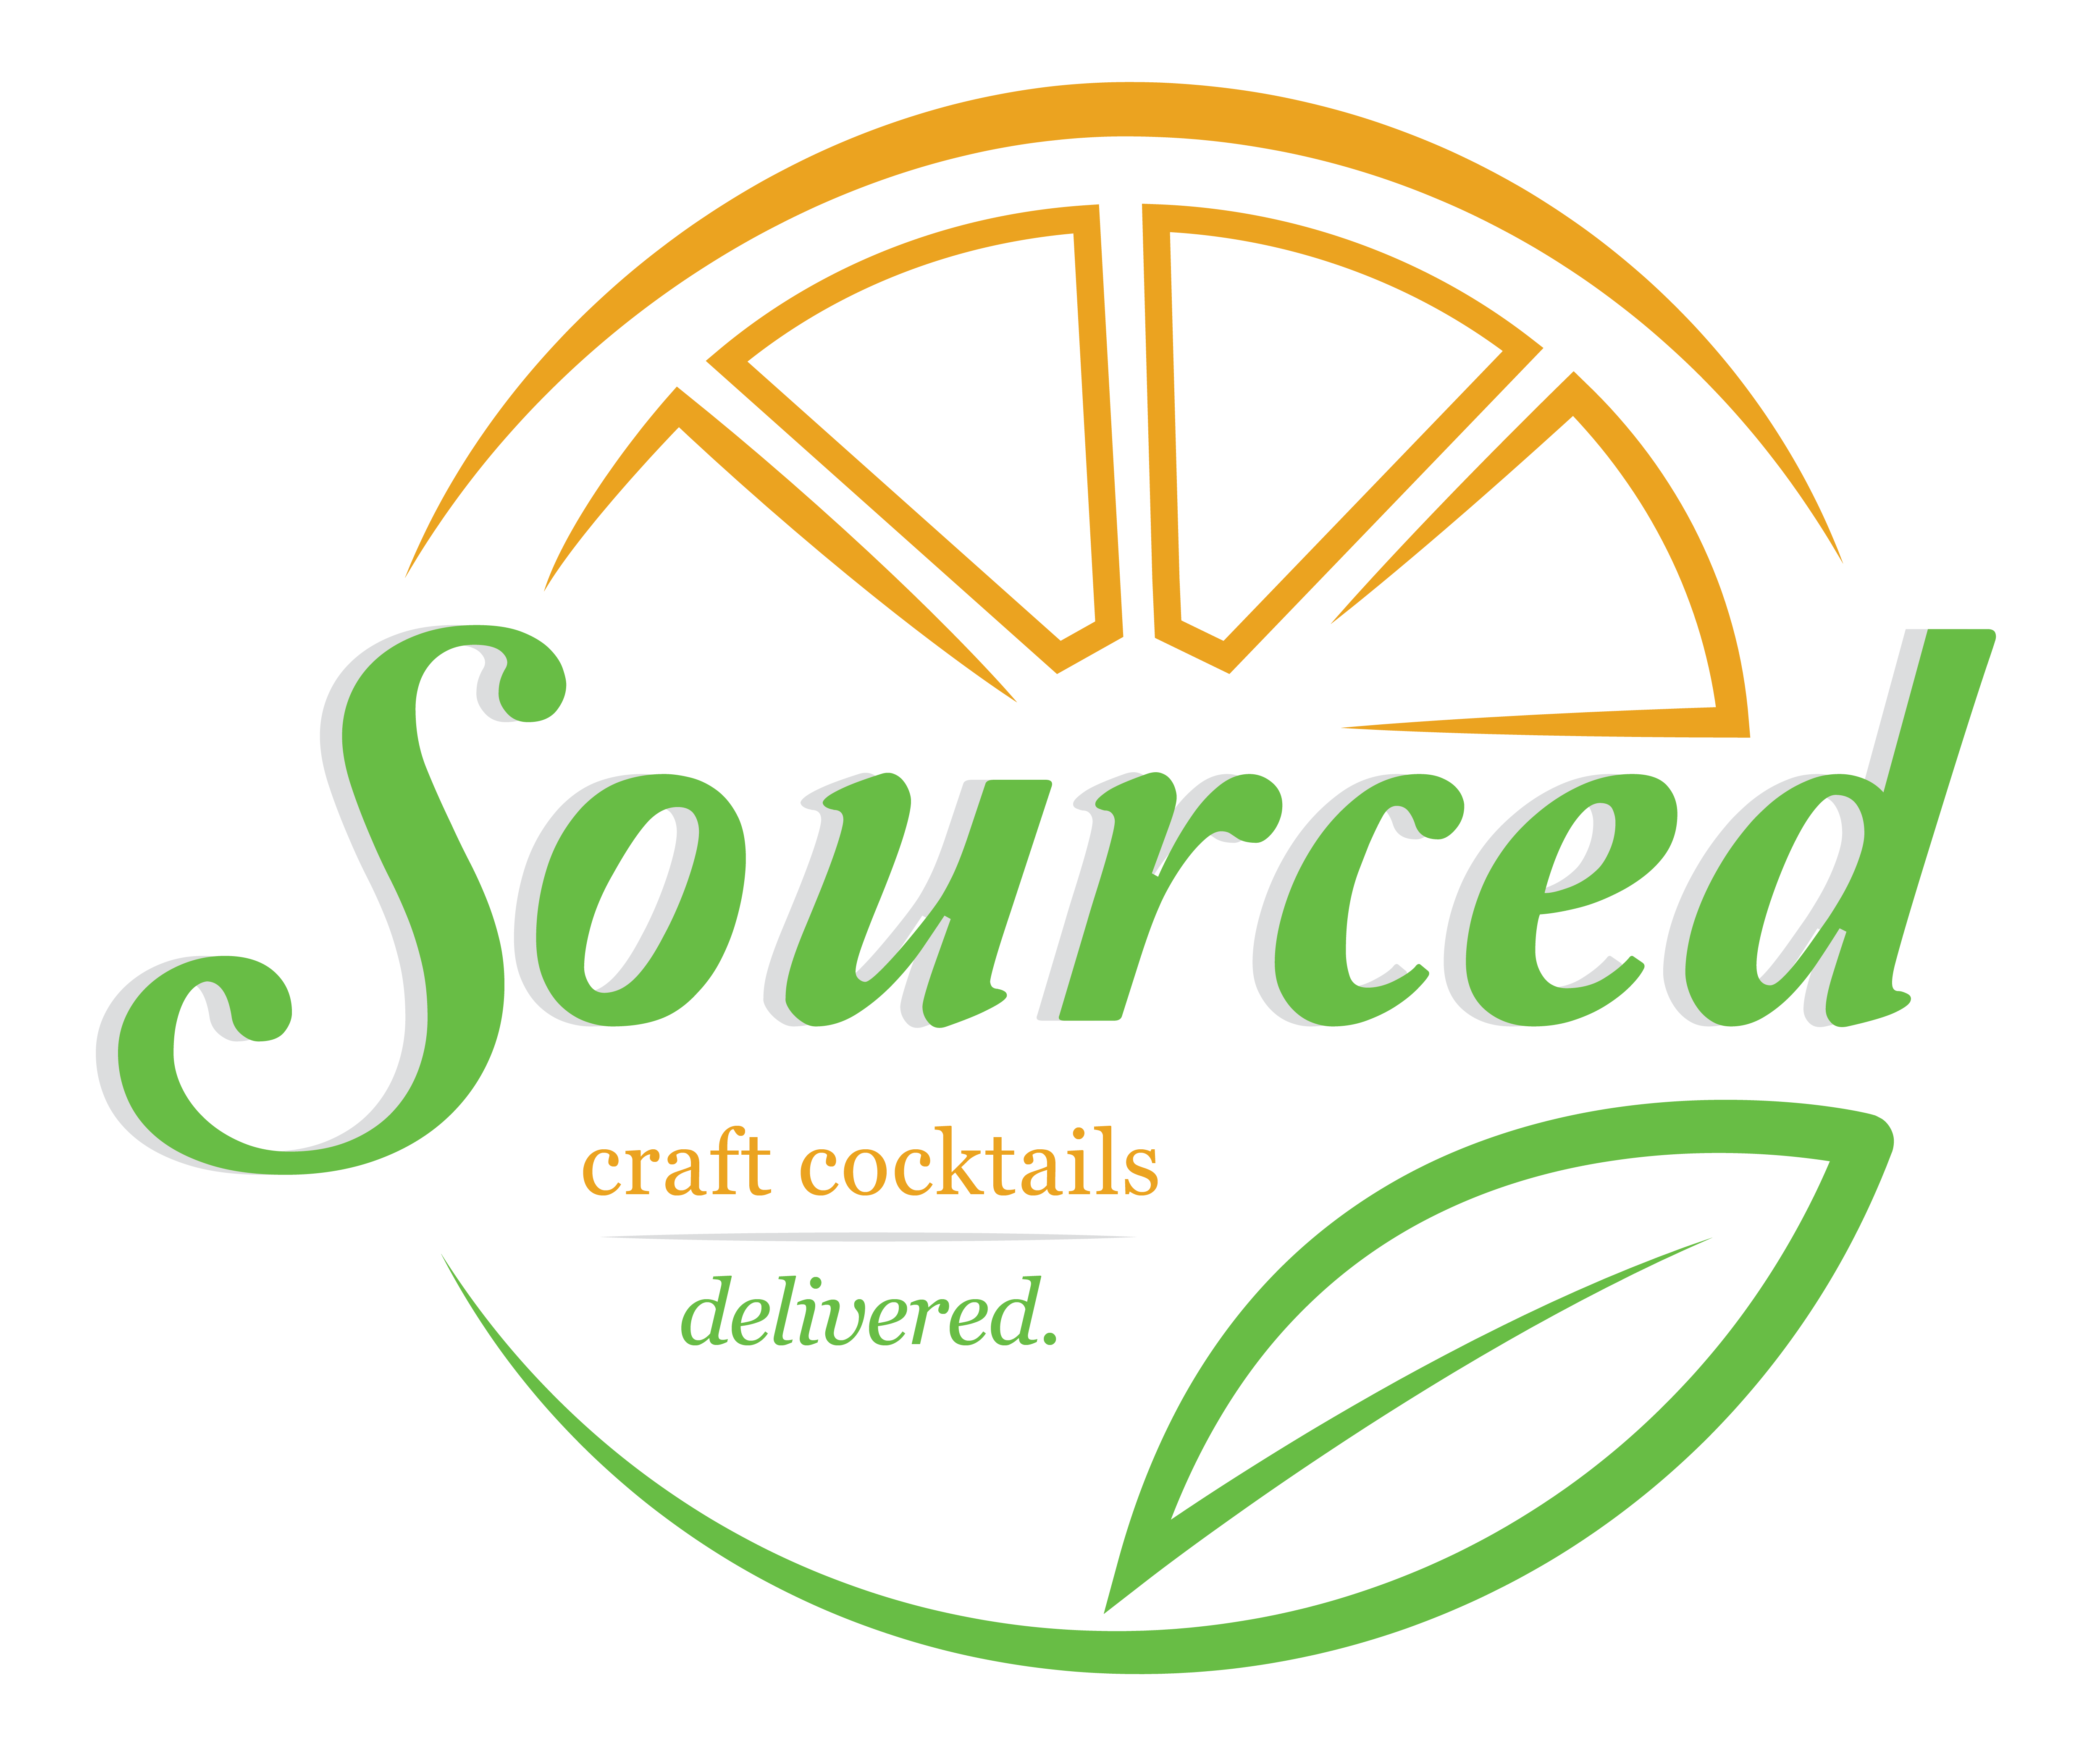 Sourced Craft Cocktails